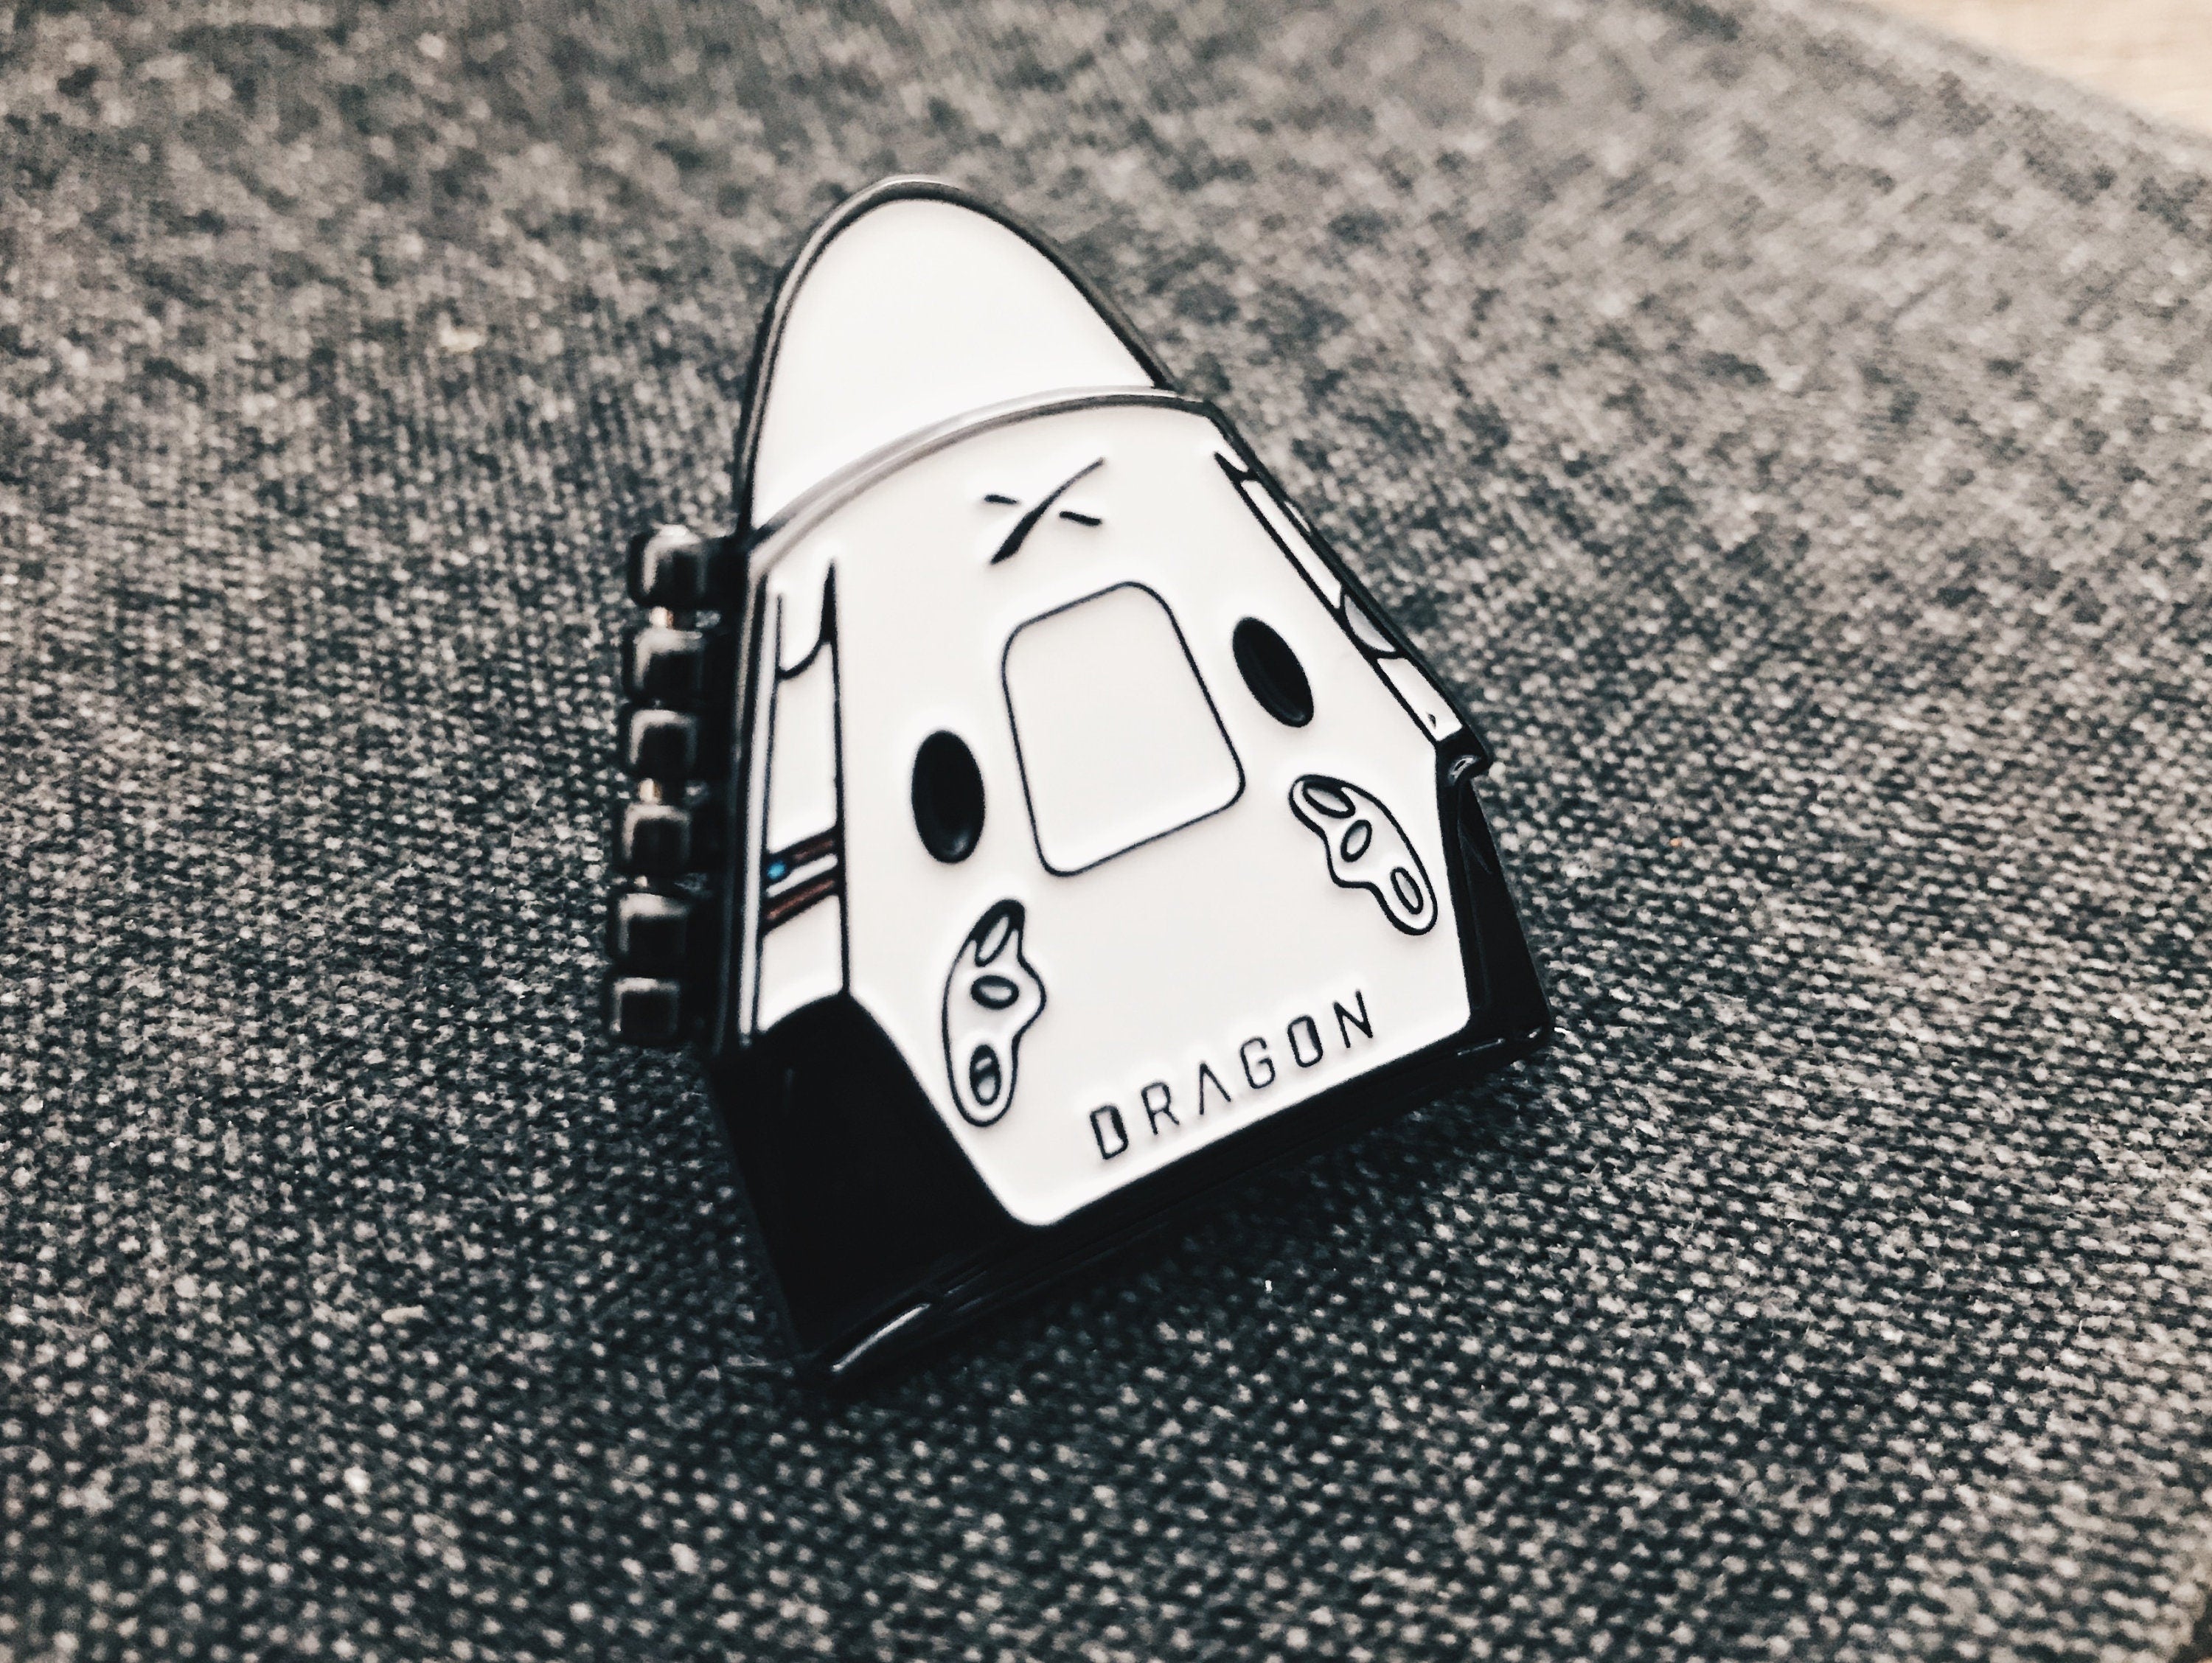 Crew Dragon Capsule Hinged Enamel Pin - SpaceX Dragonship Interactive Lapel Pin / Badge - Space & NASA Fan Gift